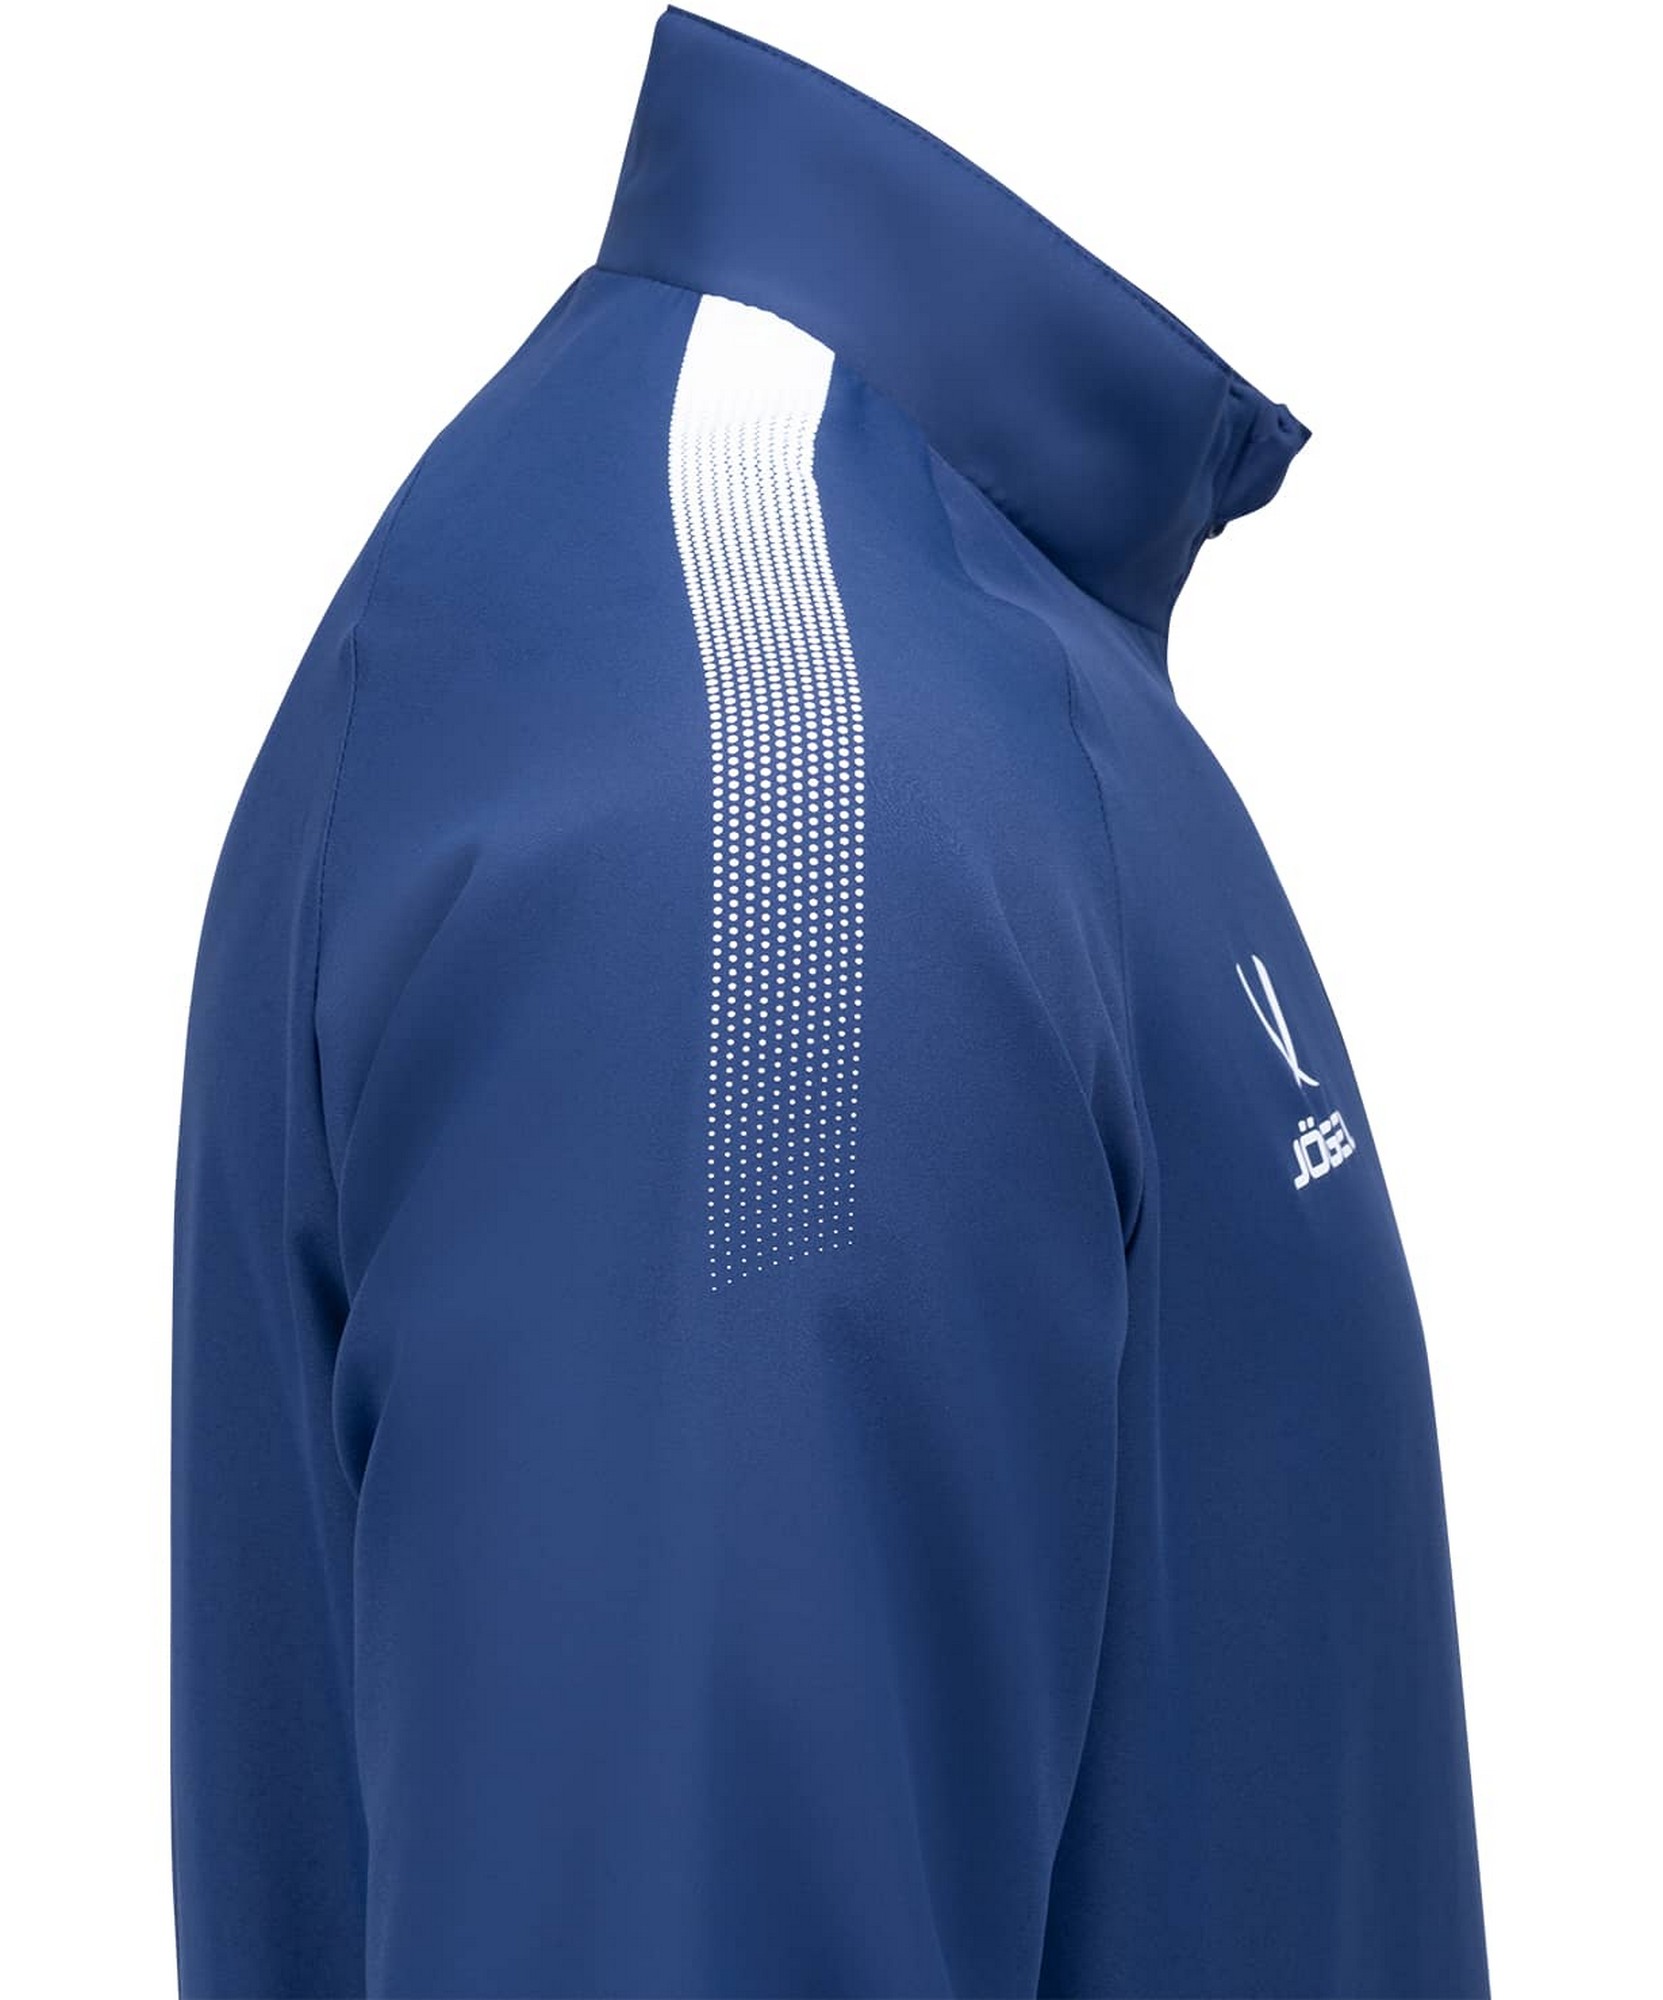 Костюм спортивный Jogel CAMP Lined Suit темно-синий\темно-синий 1663_2000